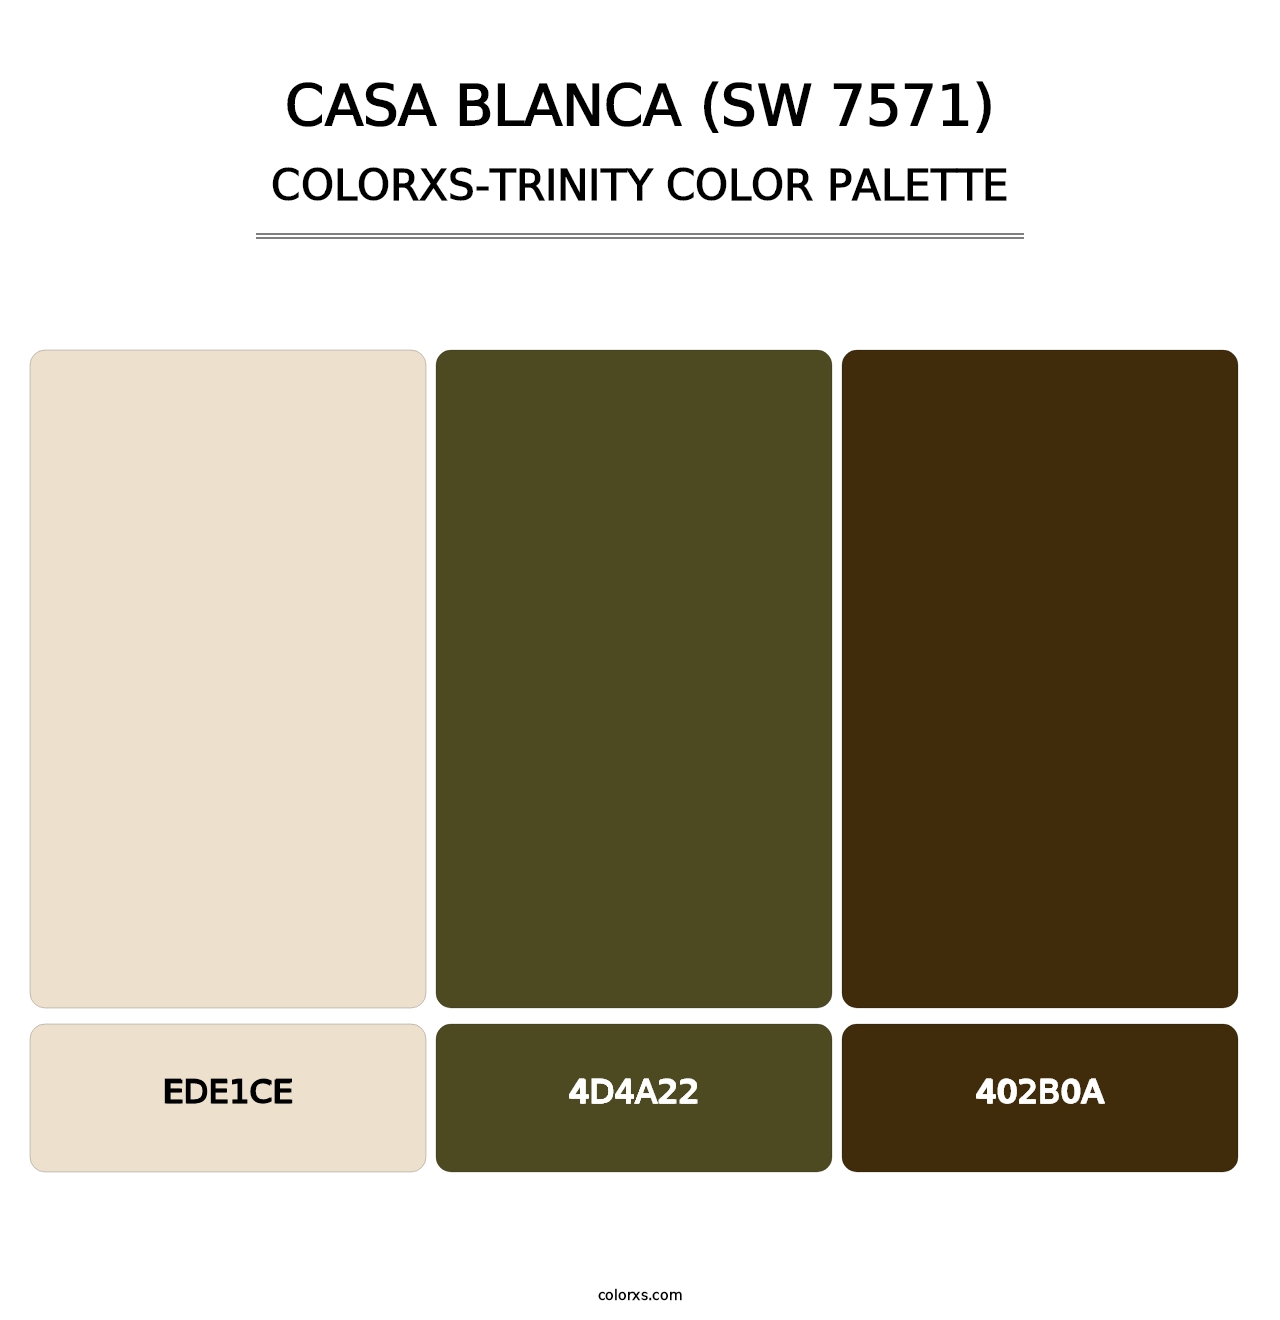 Casa Blanca (SW 7571) - Colorxs Trinity Palette